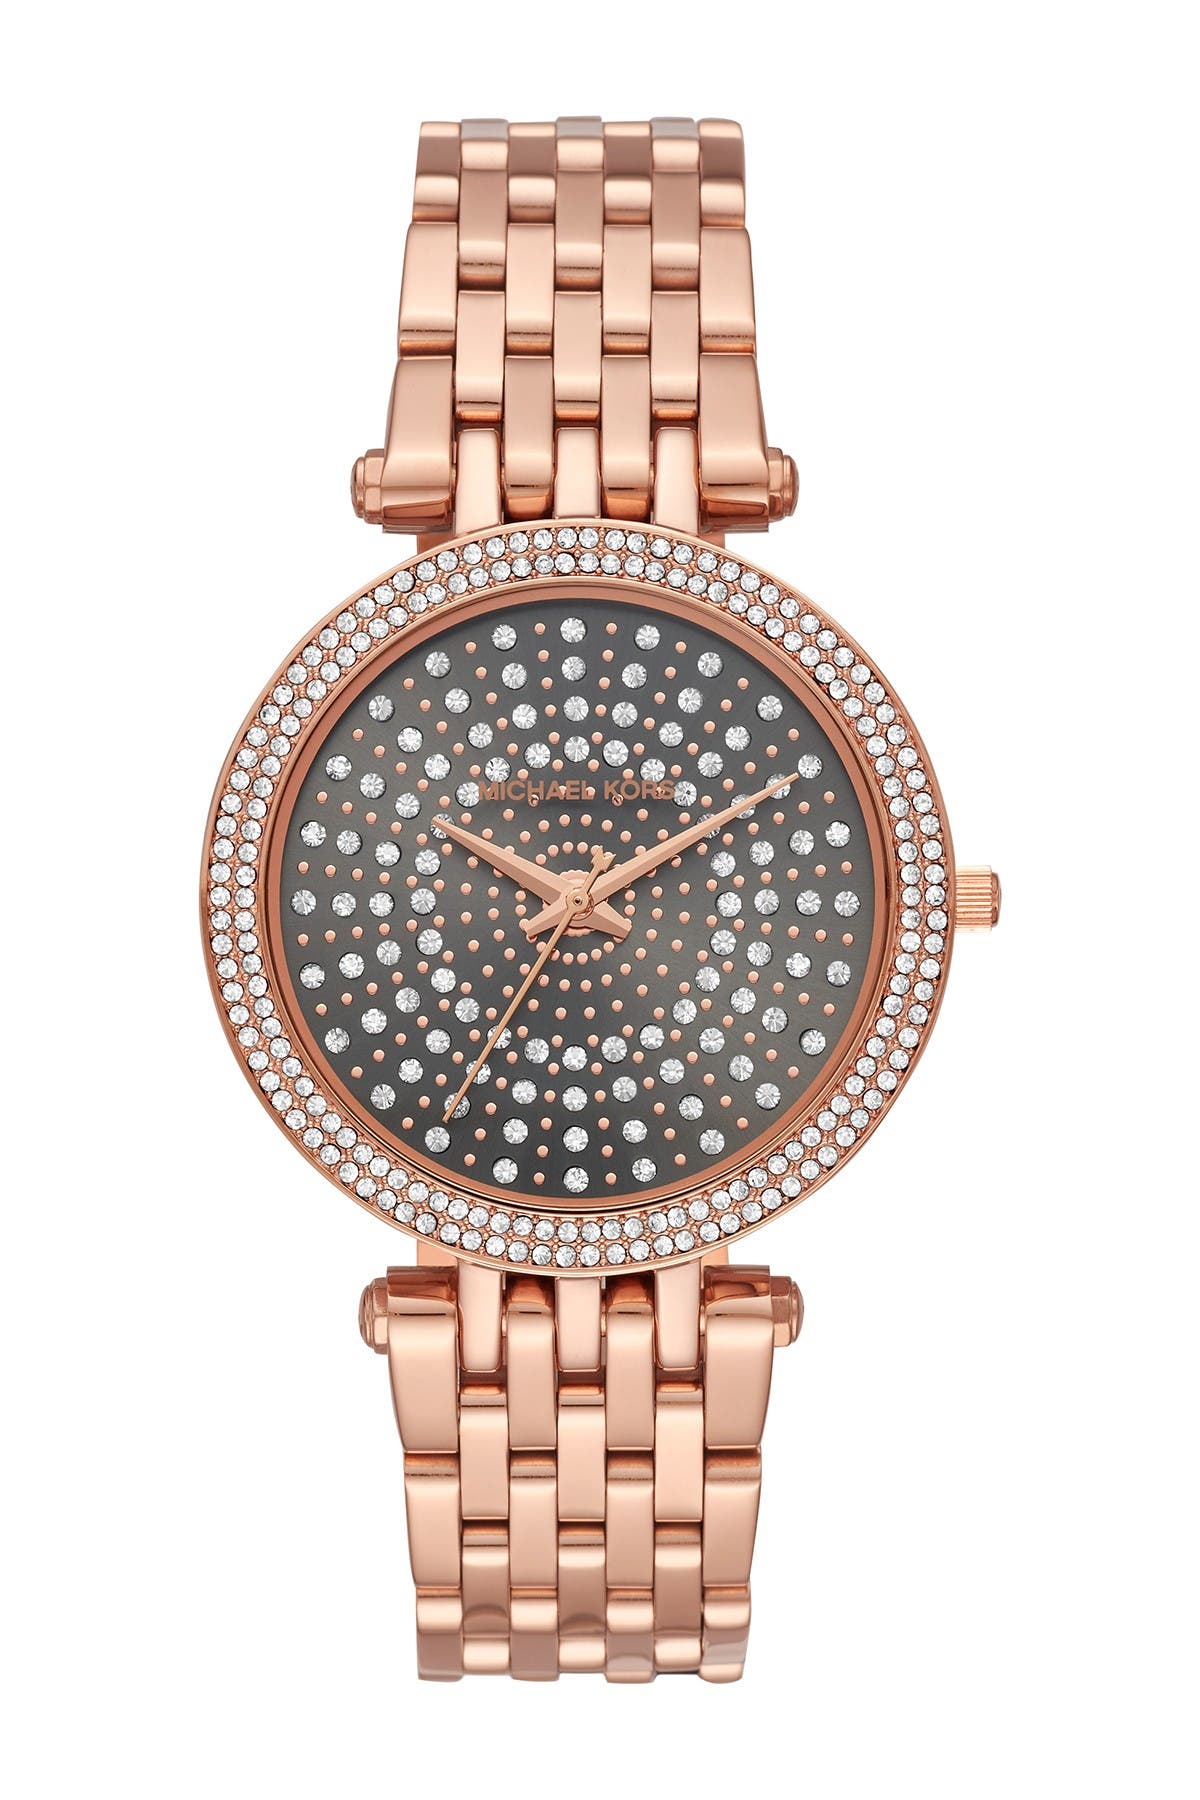 michael kors women's crystal watch